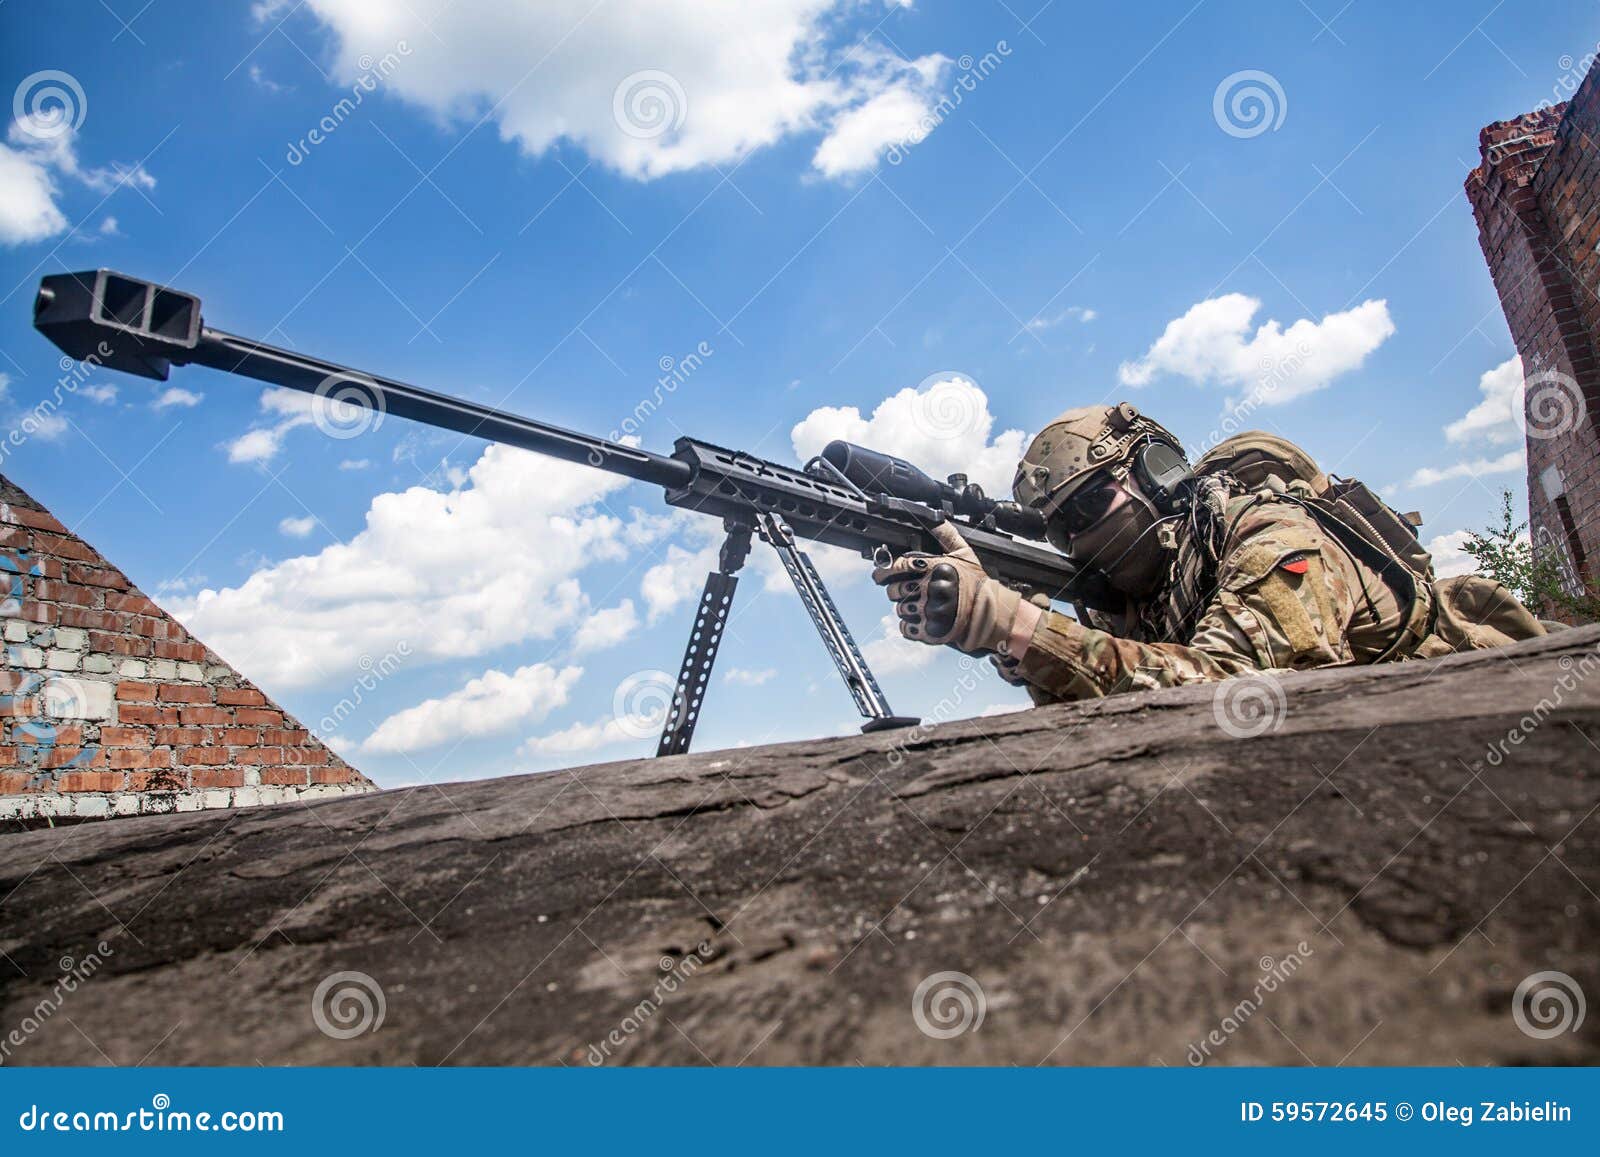 Army ranger sniper stock image. Image of nato, private ...